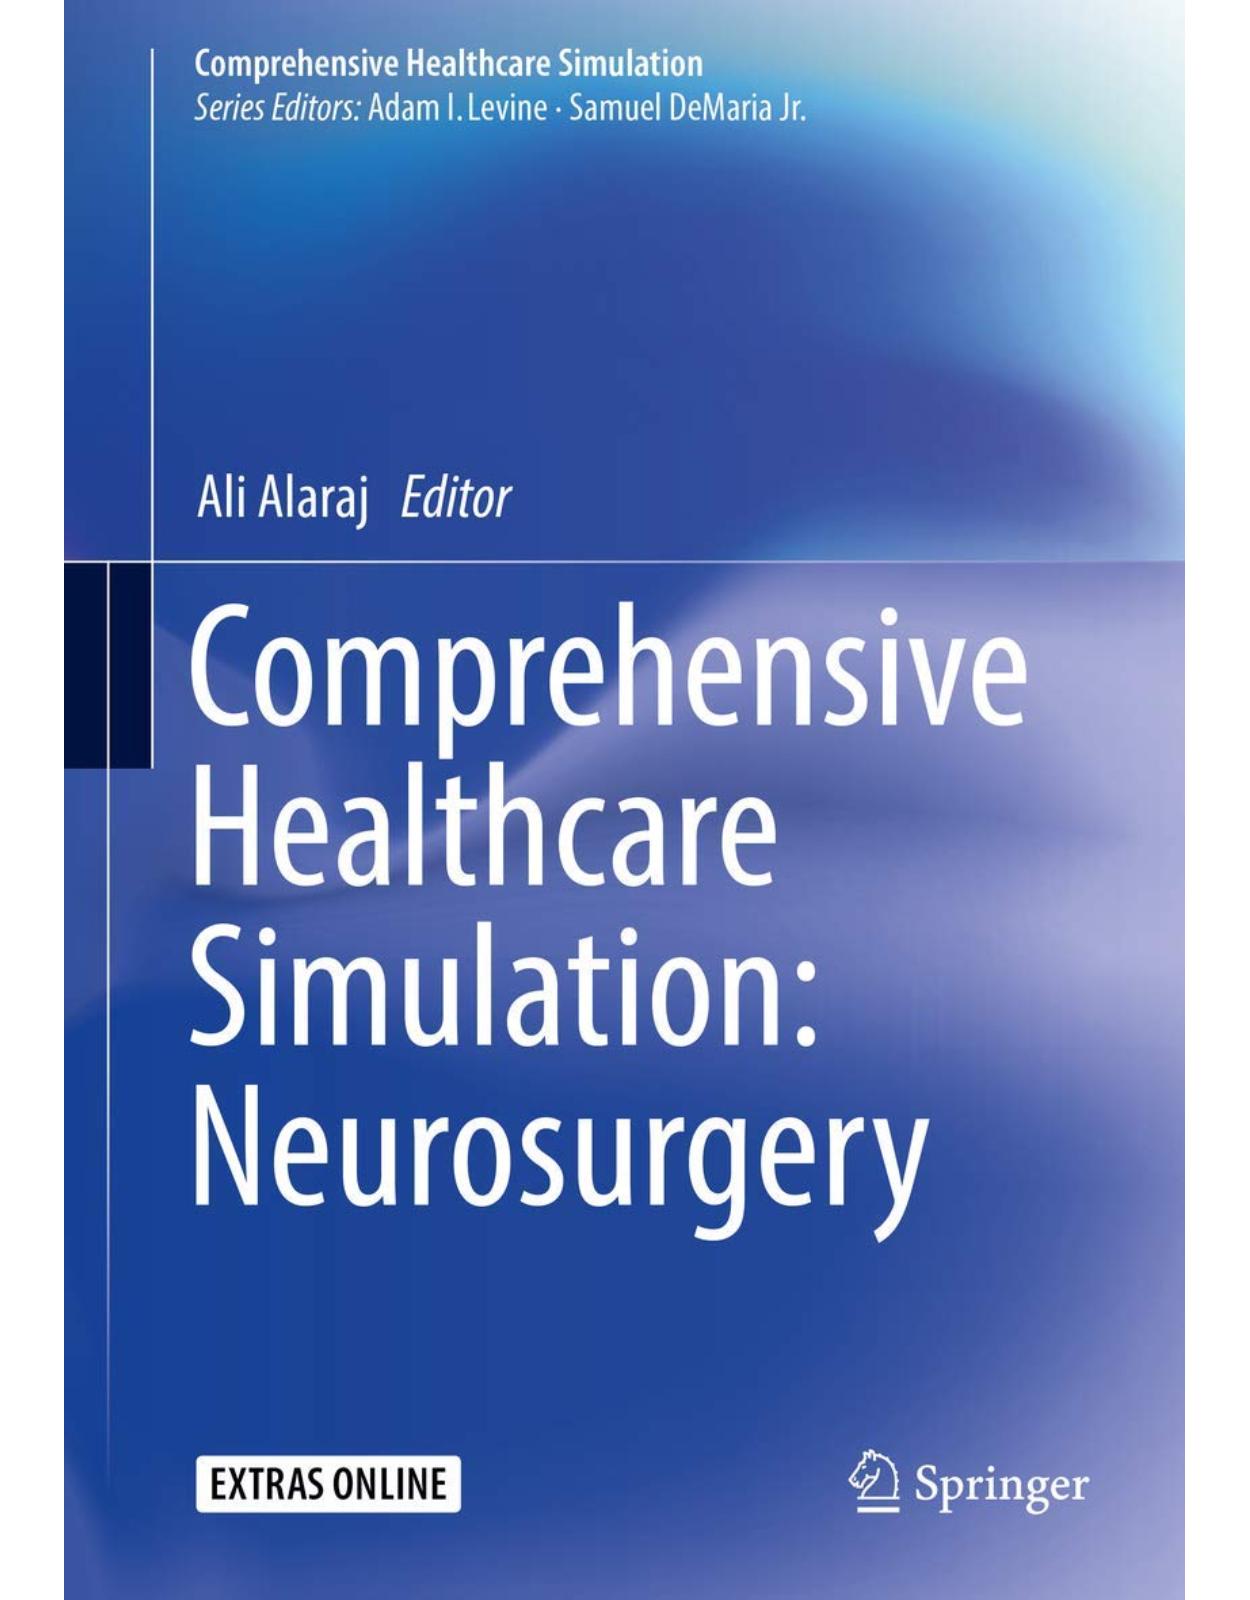 Comprehensive Healthcare Simulation: Neurosurgery